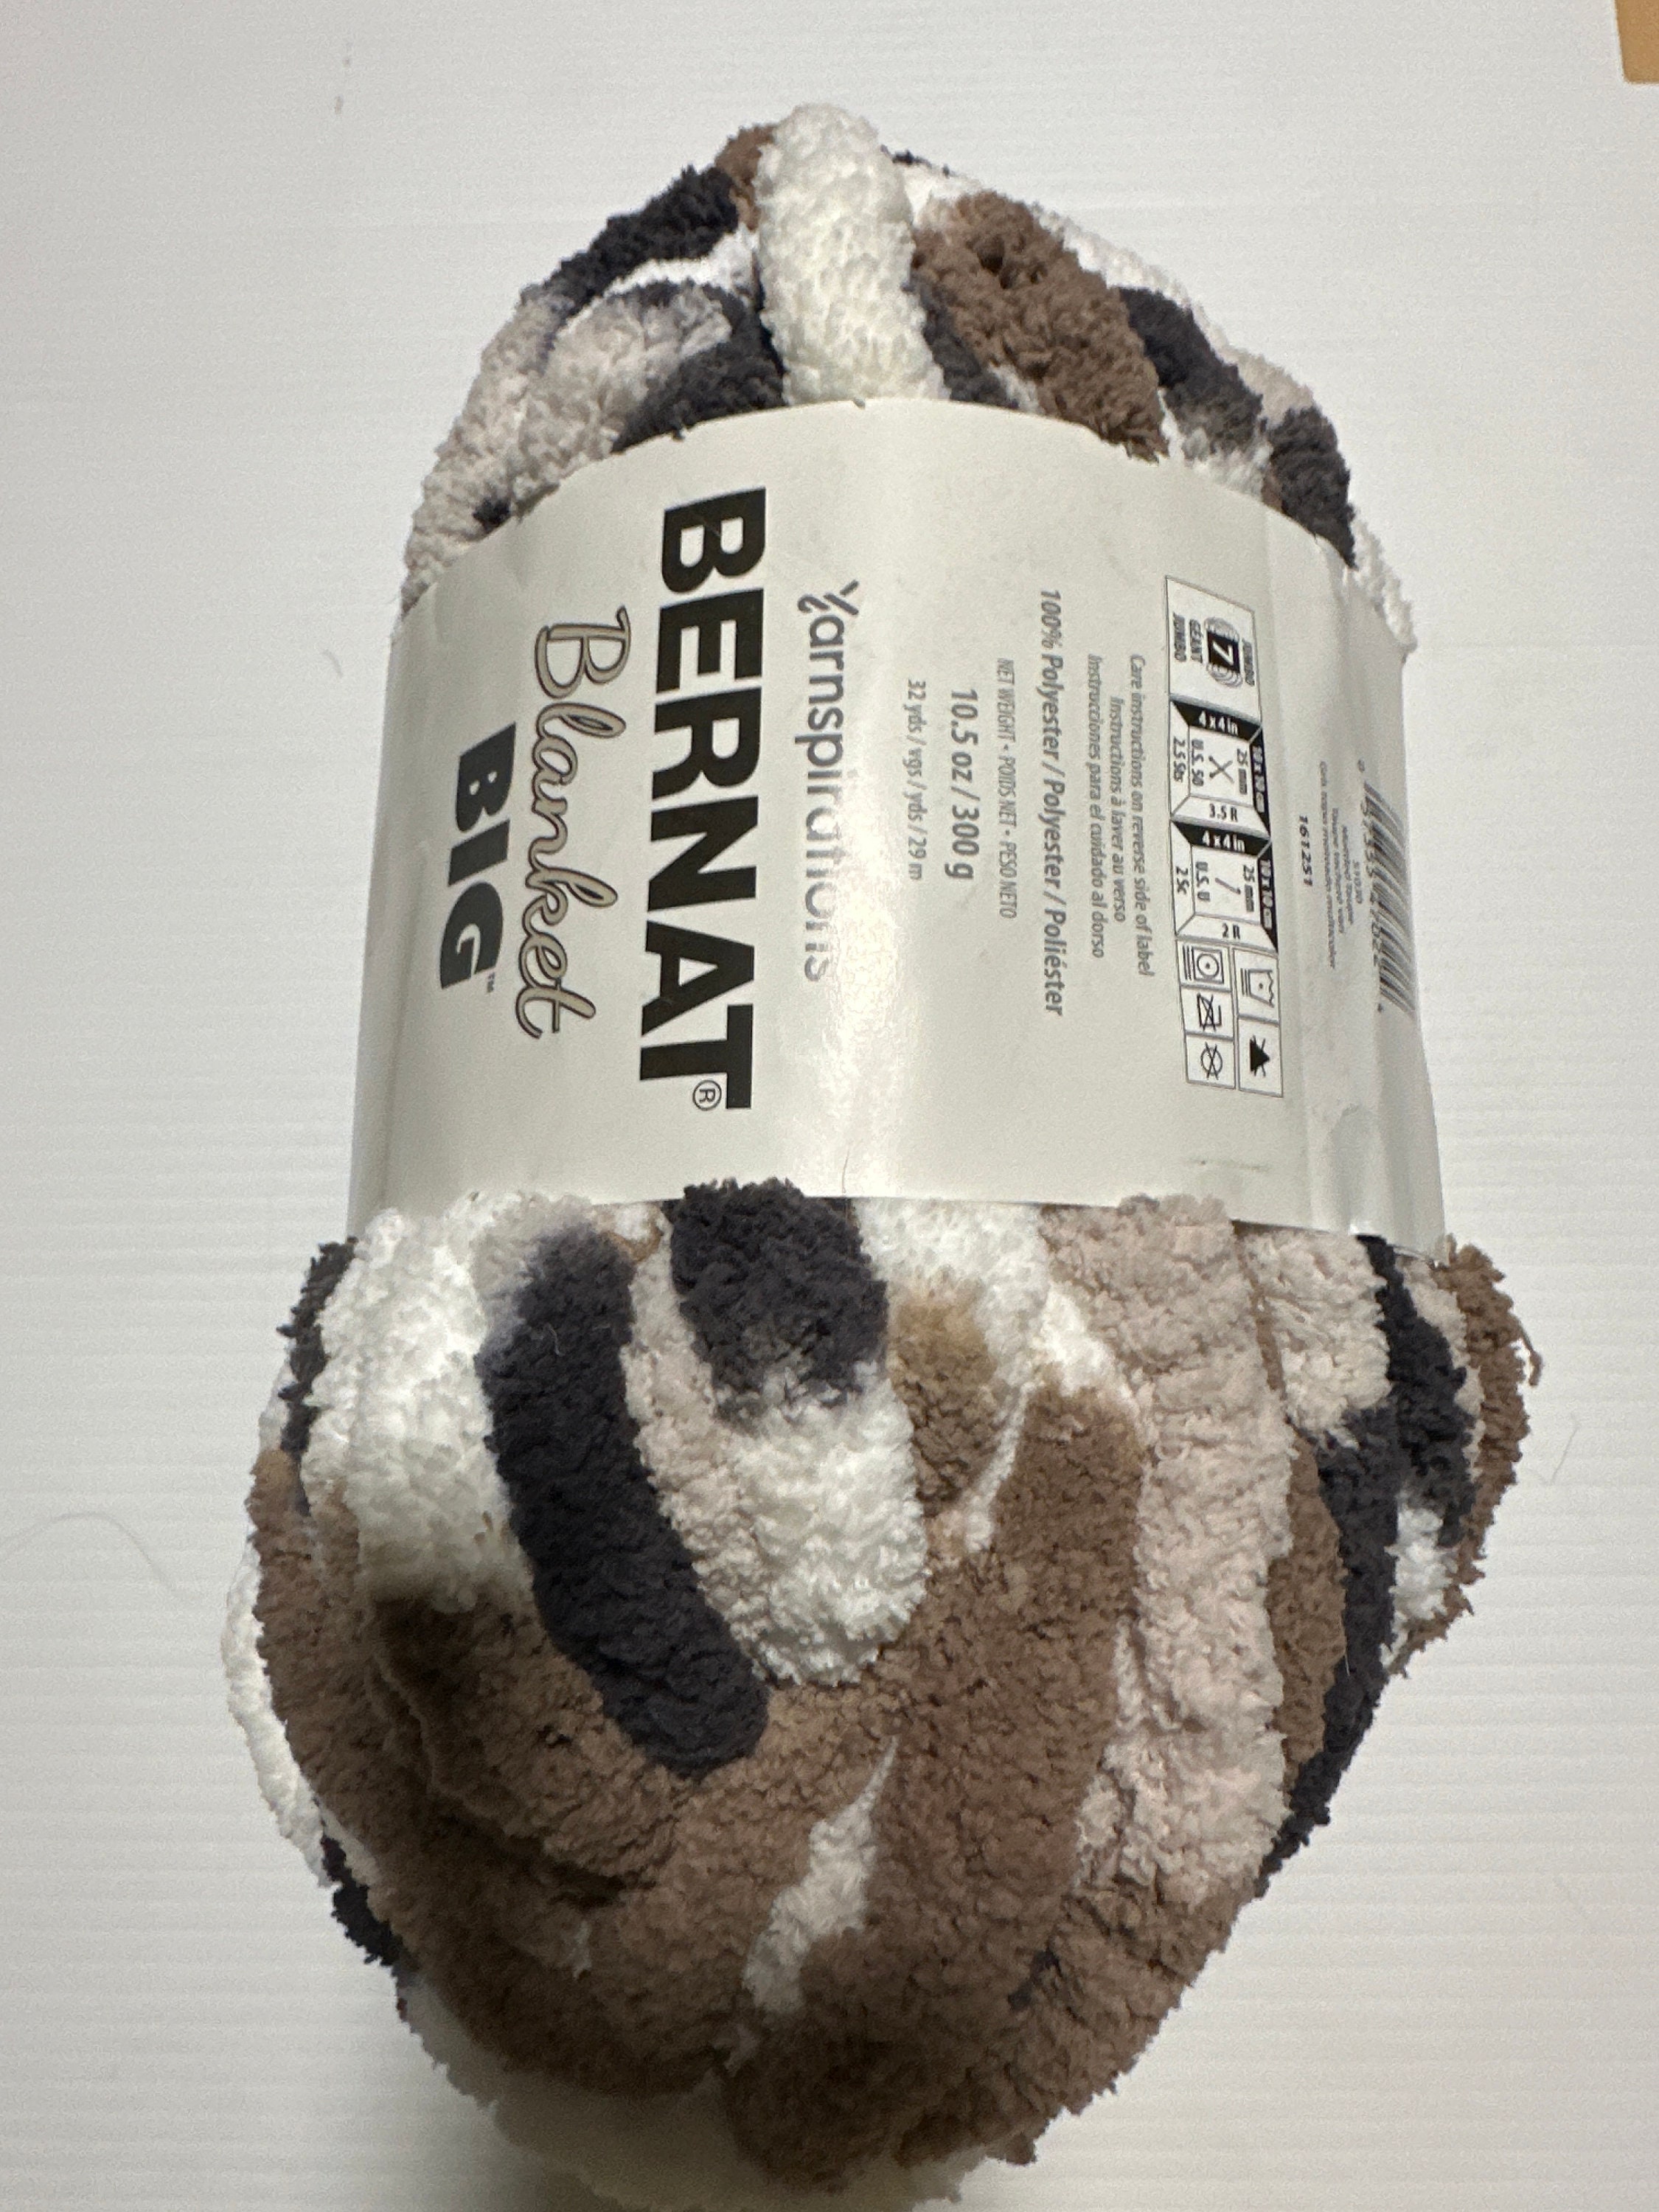 Bernat Blanket Yarn Sonoma Browns Tans 100% Polyester Super Bulky